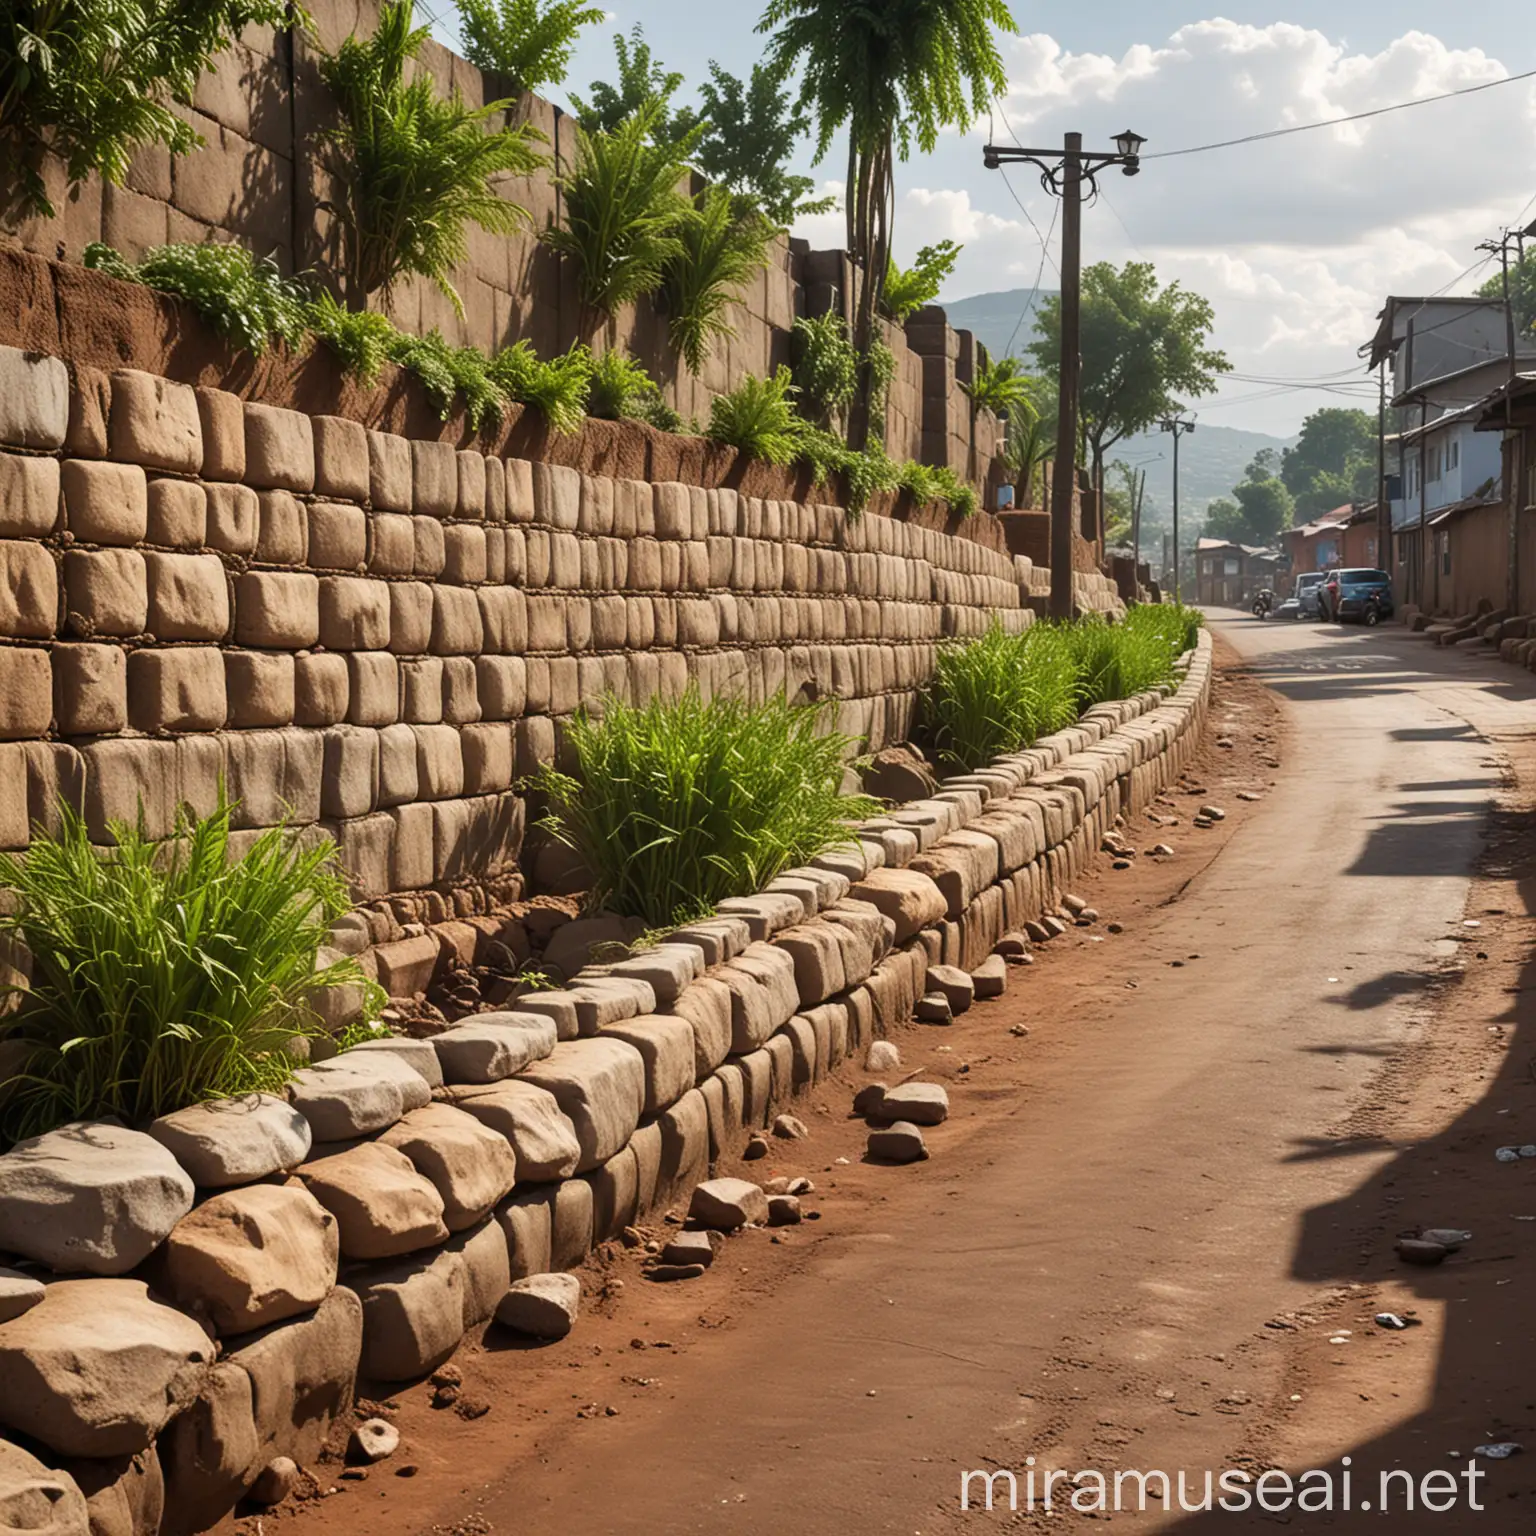 Vibrant Street Scene with Stone Retaining Wall and Planters in Rwanda Slum